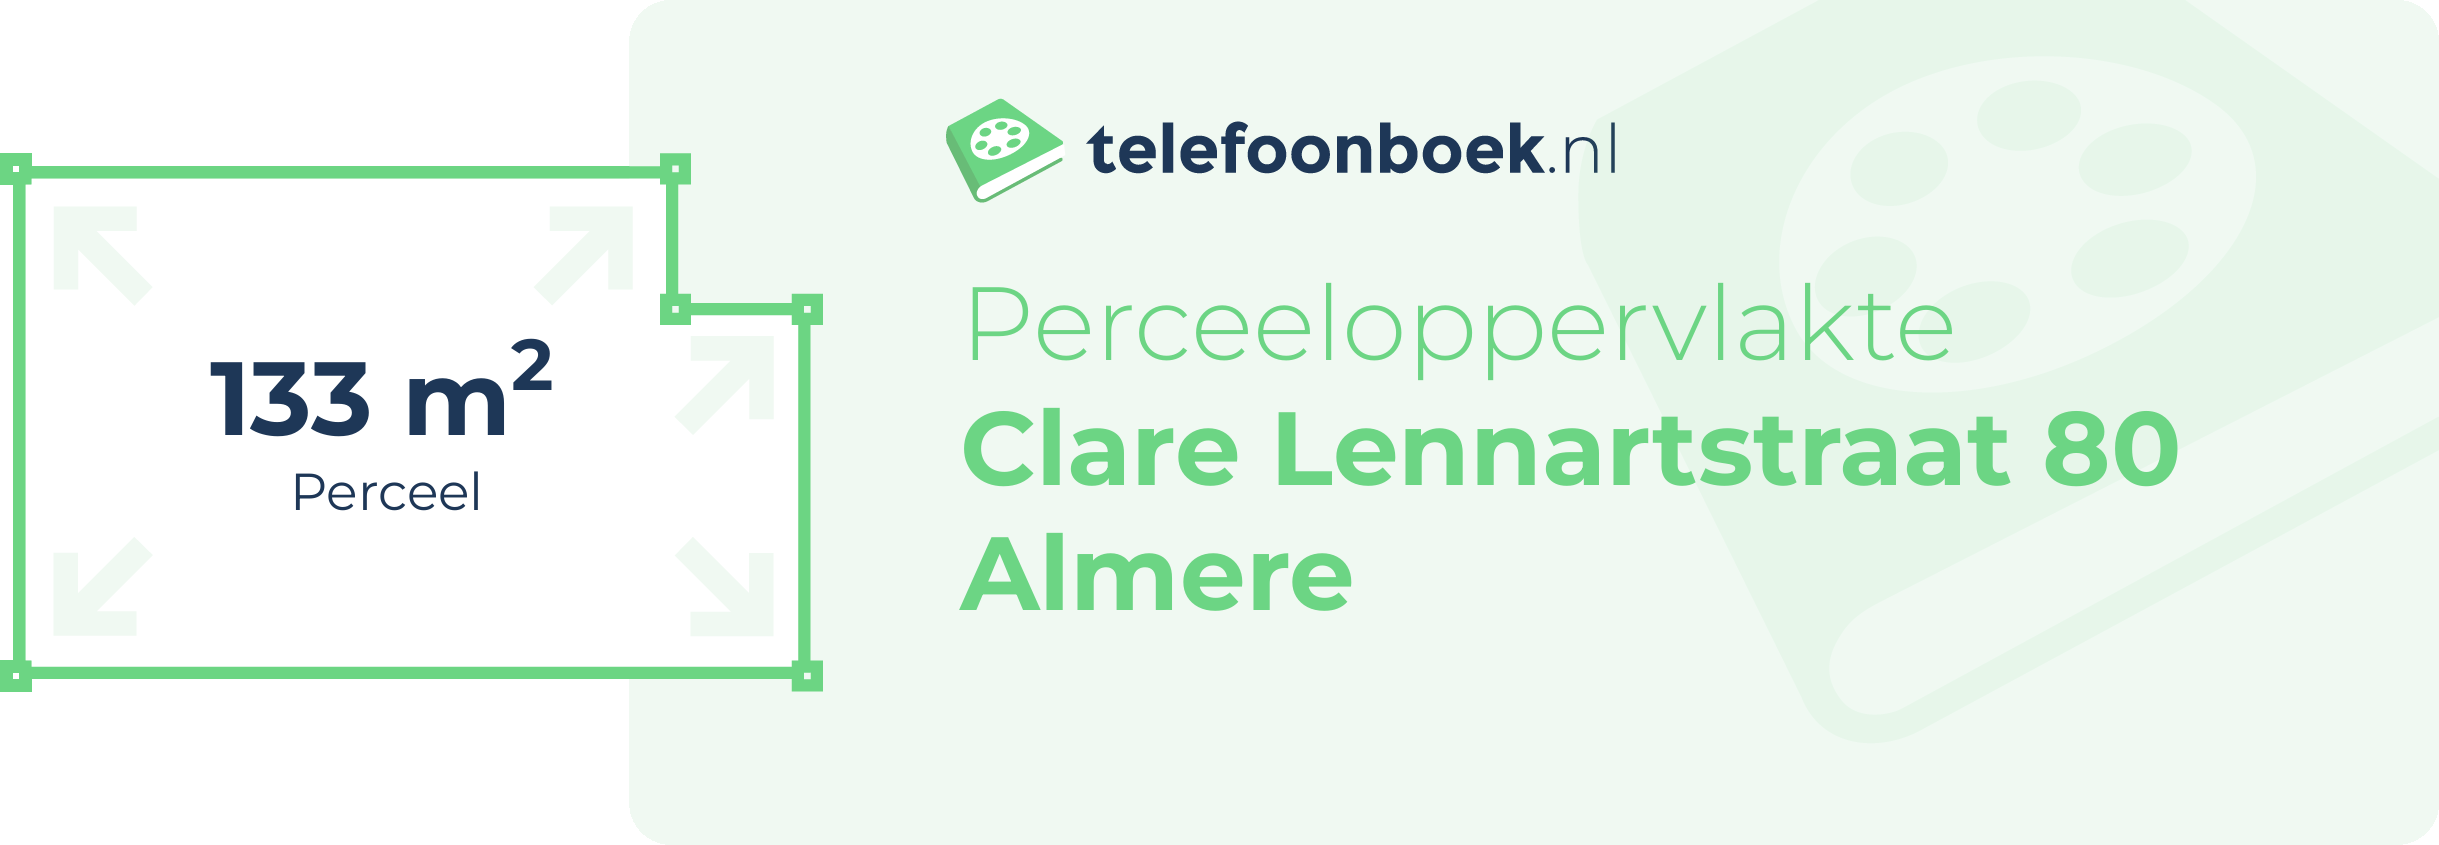 Perceeloppervlakte Clare Lennartstraat 80 Almere